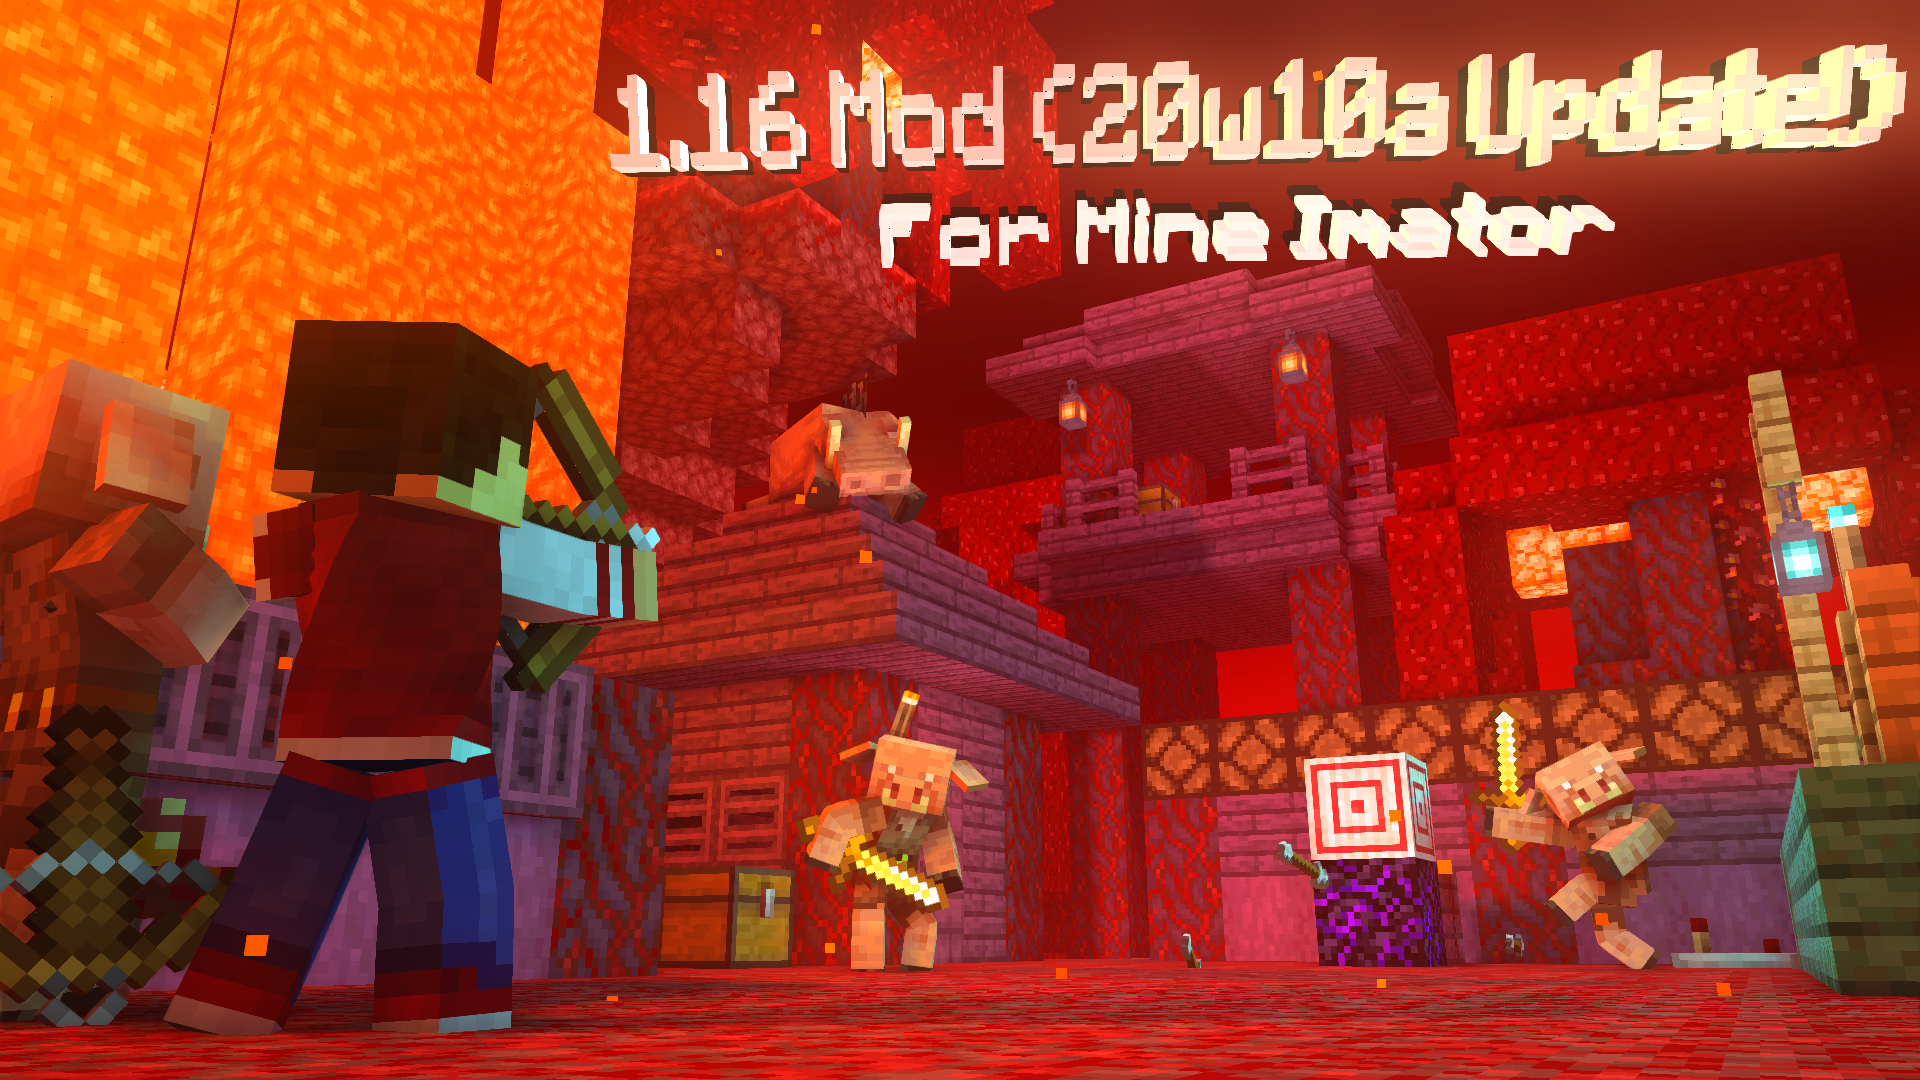 The improved version of my minecraft 1.16 wallpaper! : r/Minecraft